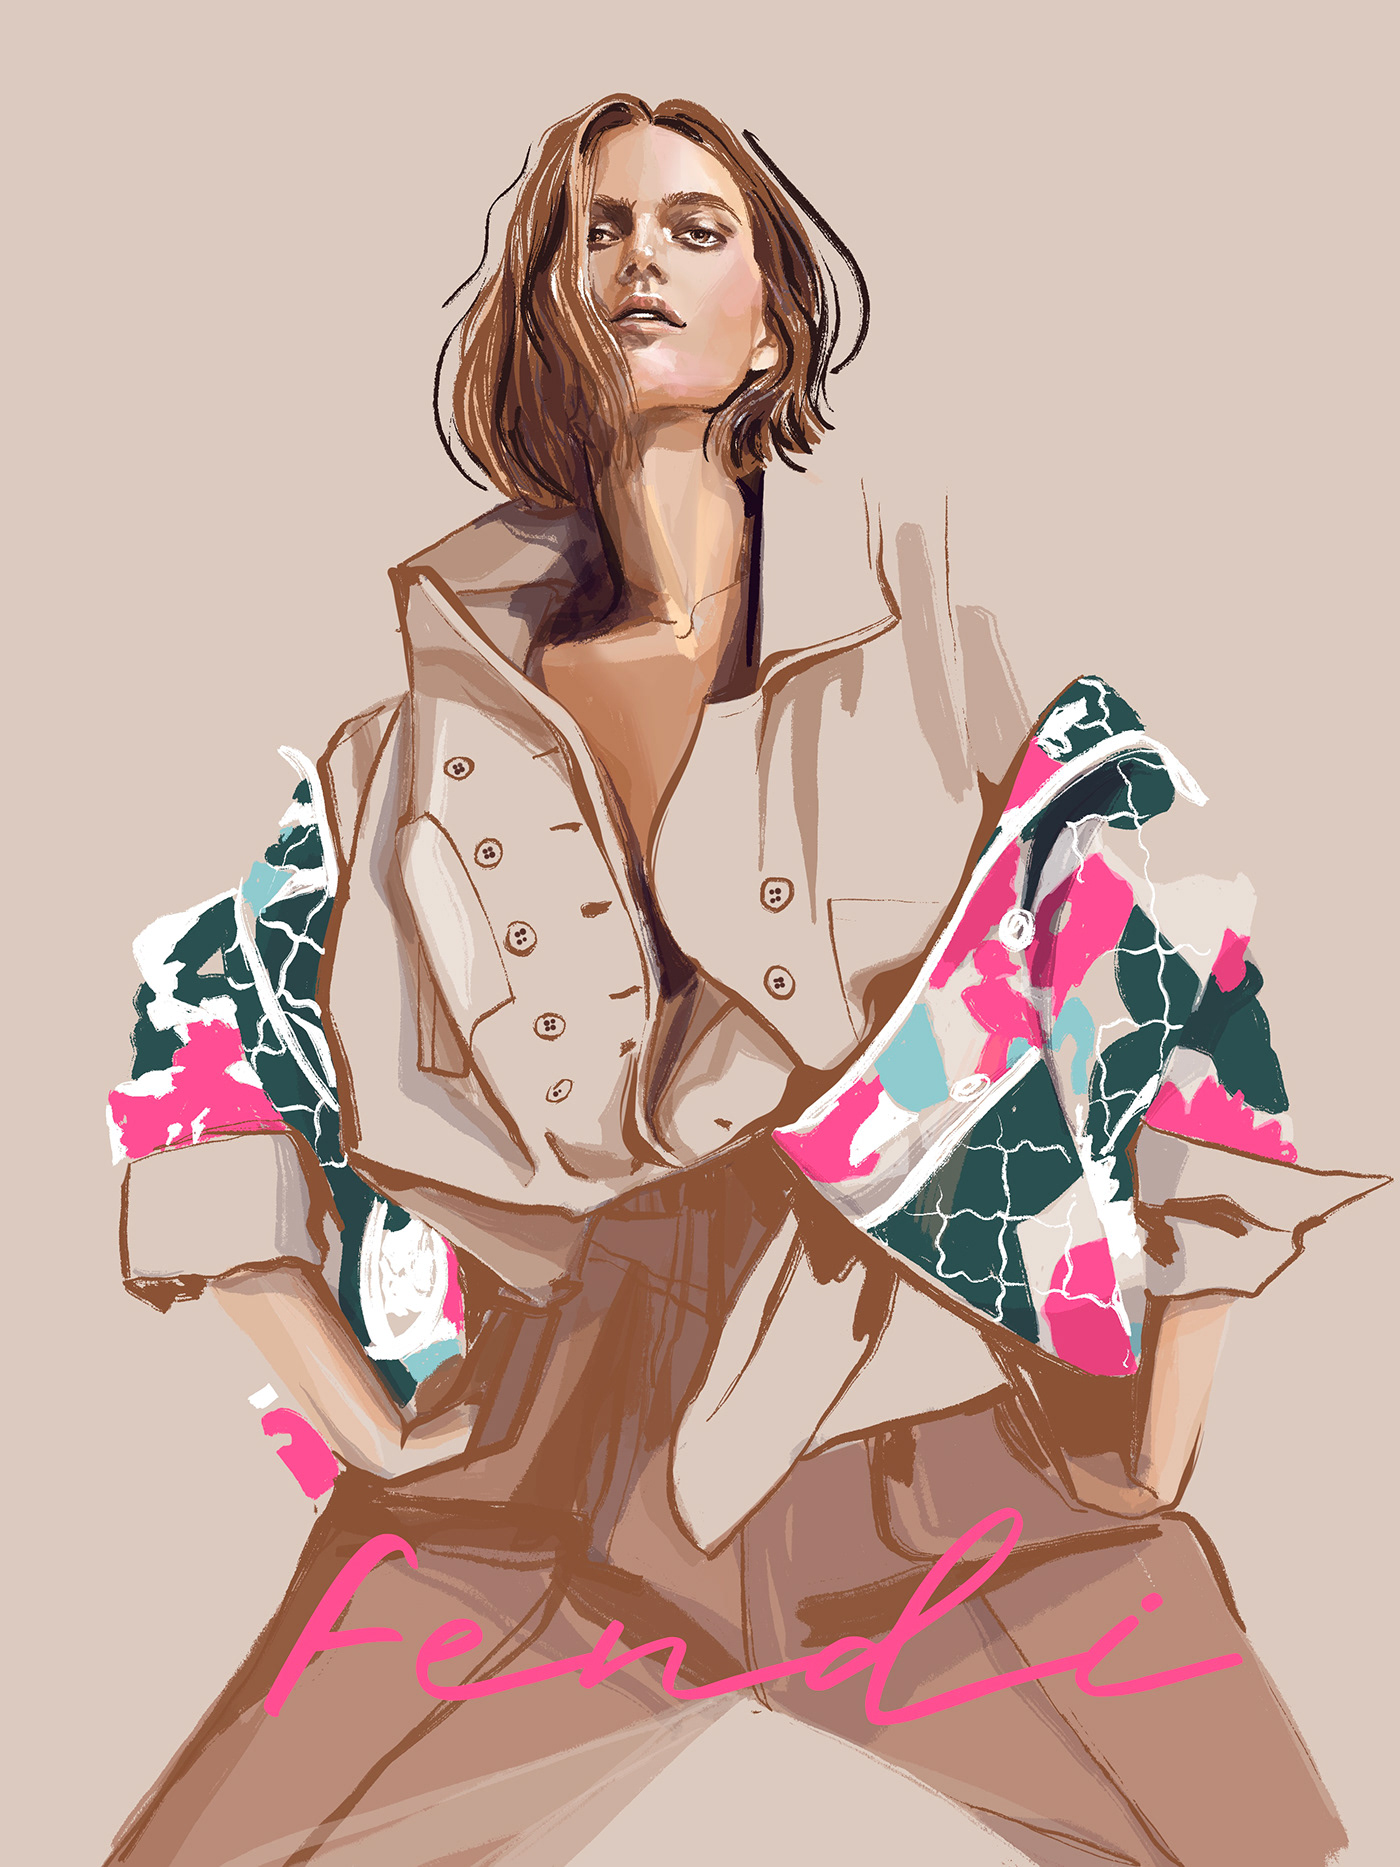 editorial Fashion  fashion illustration портрет